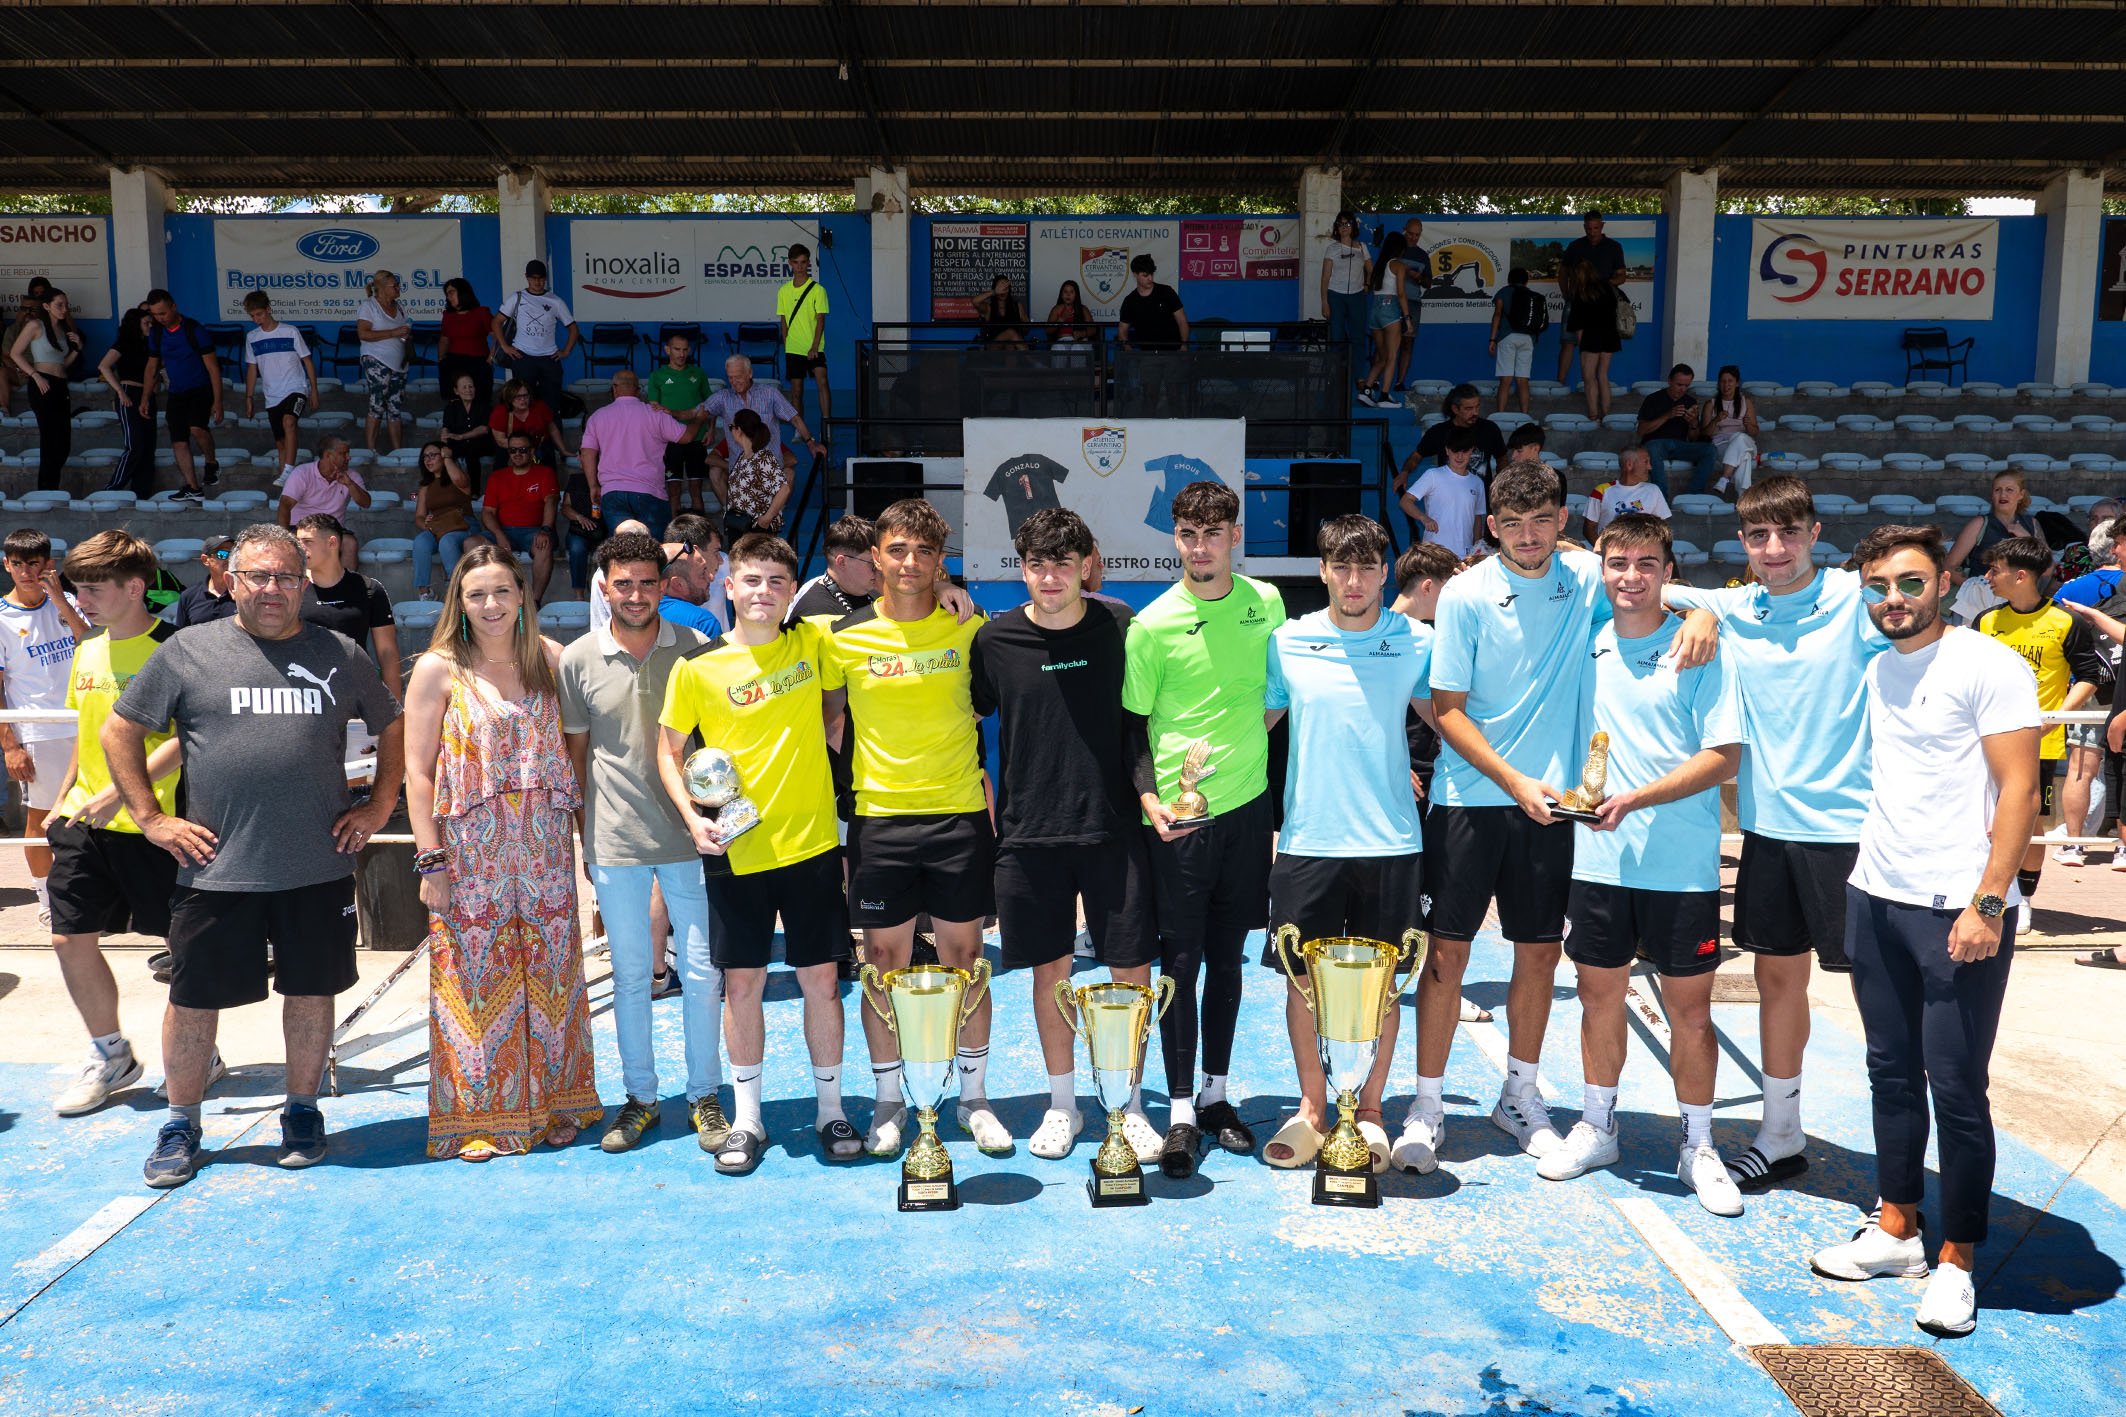 El I Torneo Almajamer de fútbol reunió este fin de semana a los mejores jugadores cadetes y juveniles de la zona